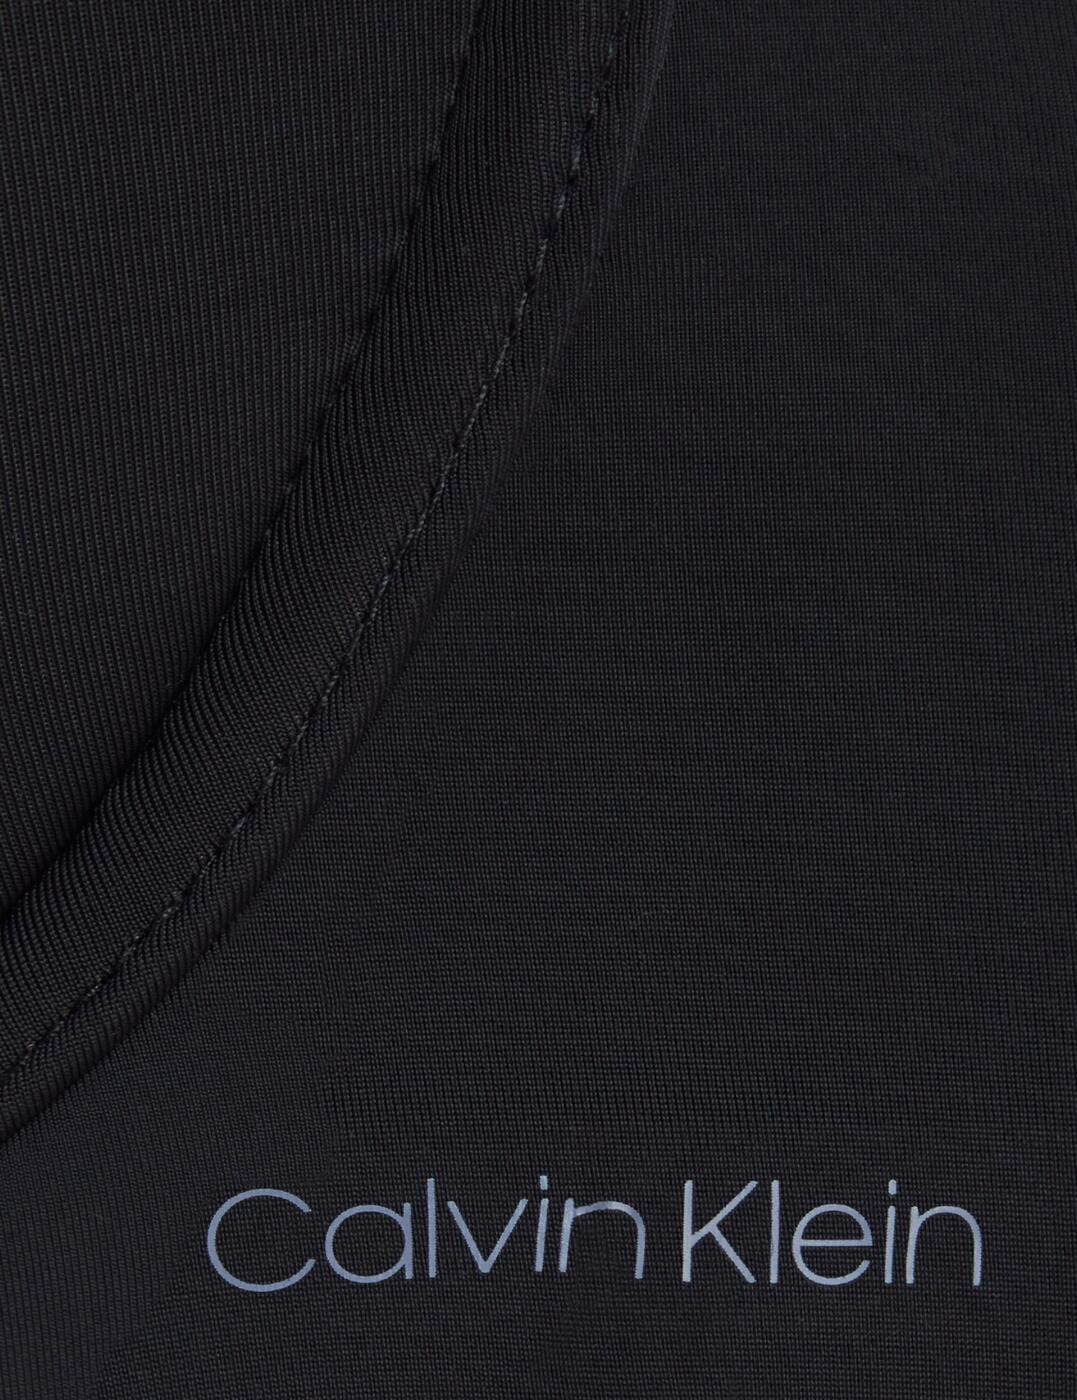 000QF5677E Calvin Klein Invisibles Strapless Push Up Bra